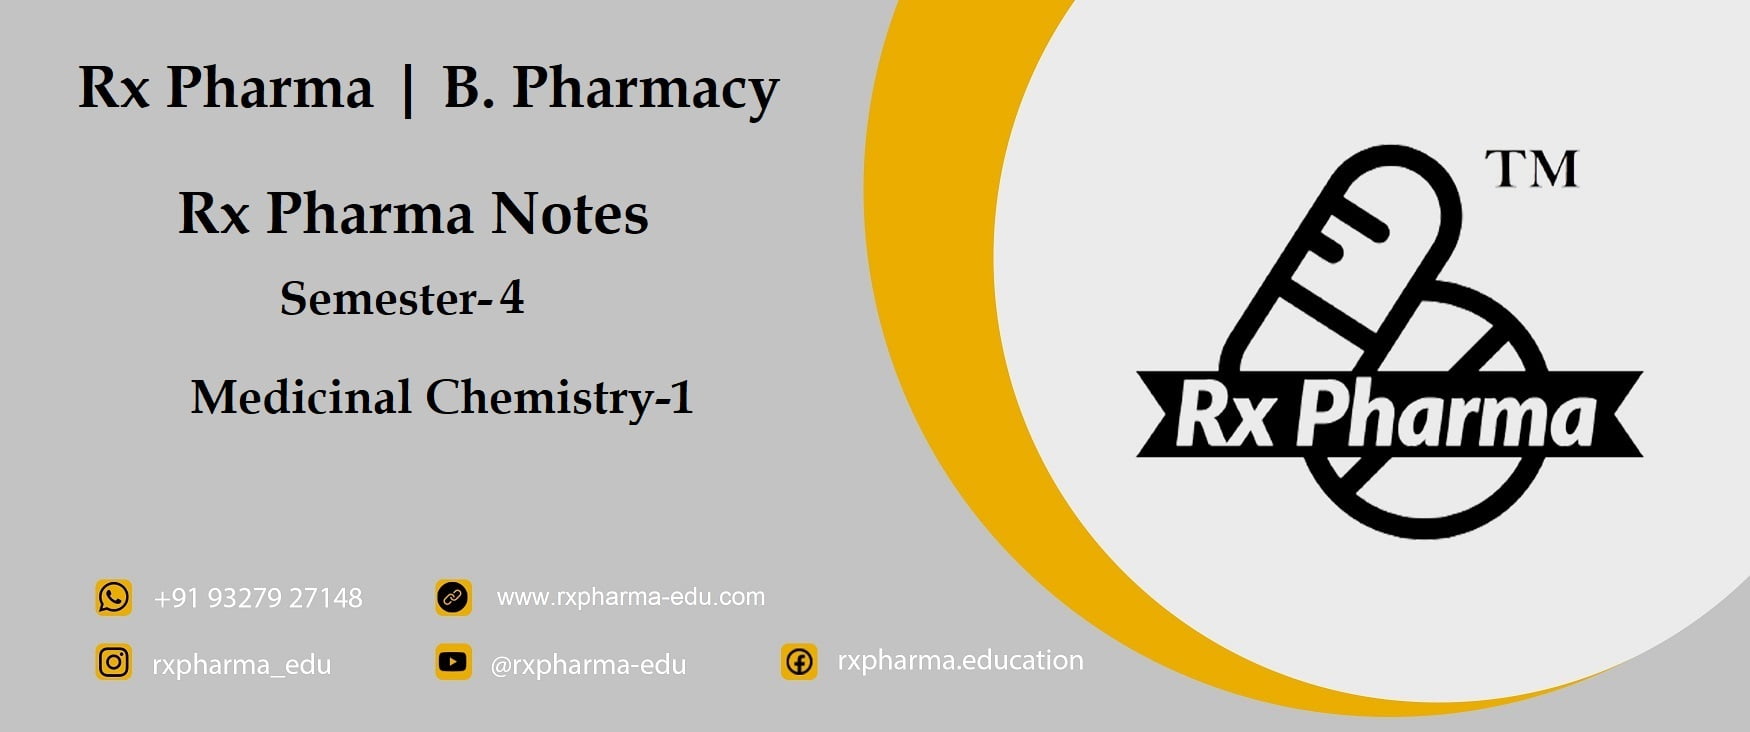 Medicinal Chemistry-1 Notes Banner